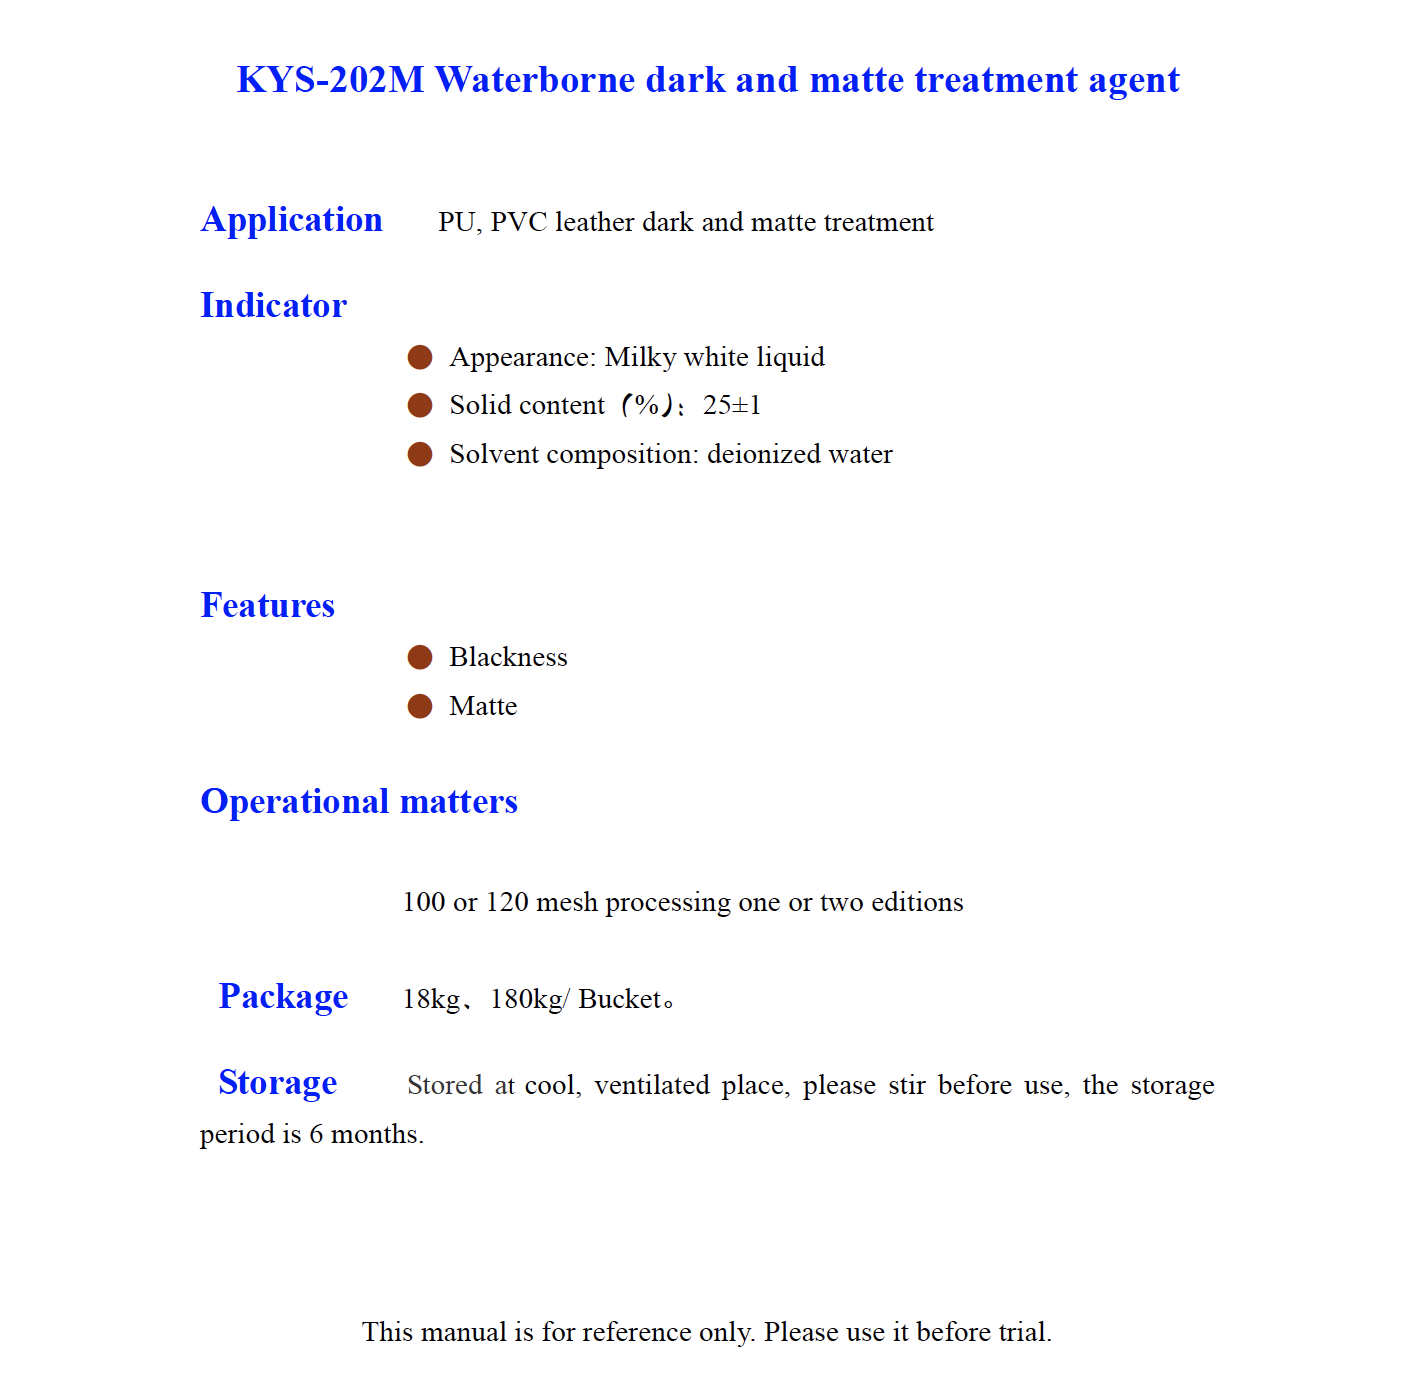 KYS 202M Waterborne dark and matte treatment agent